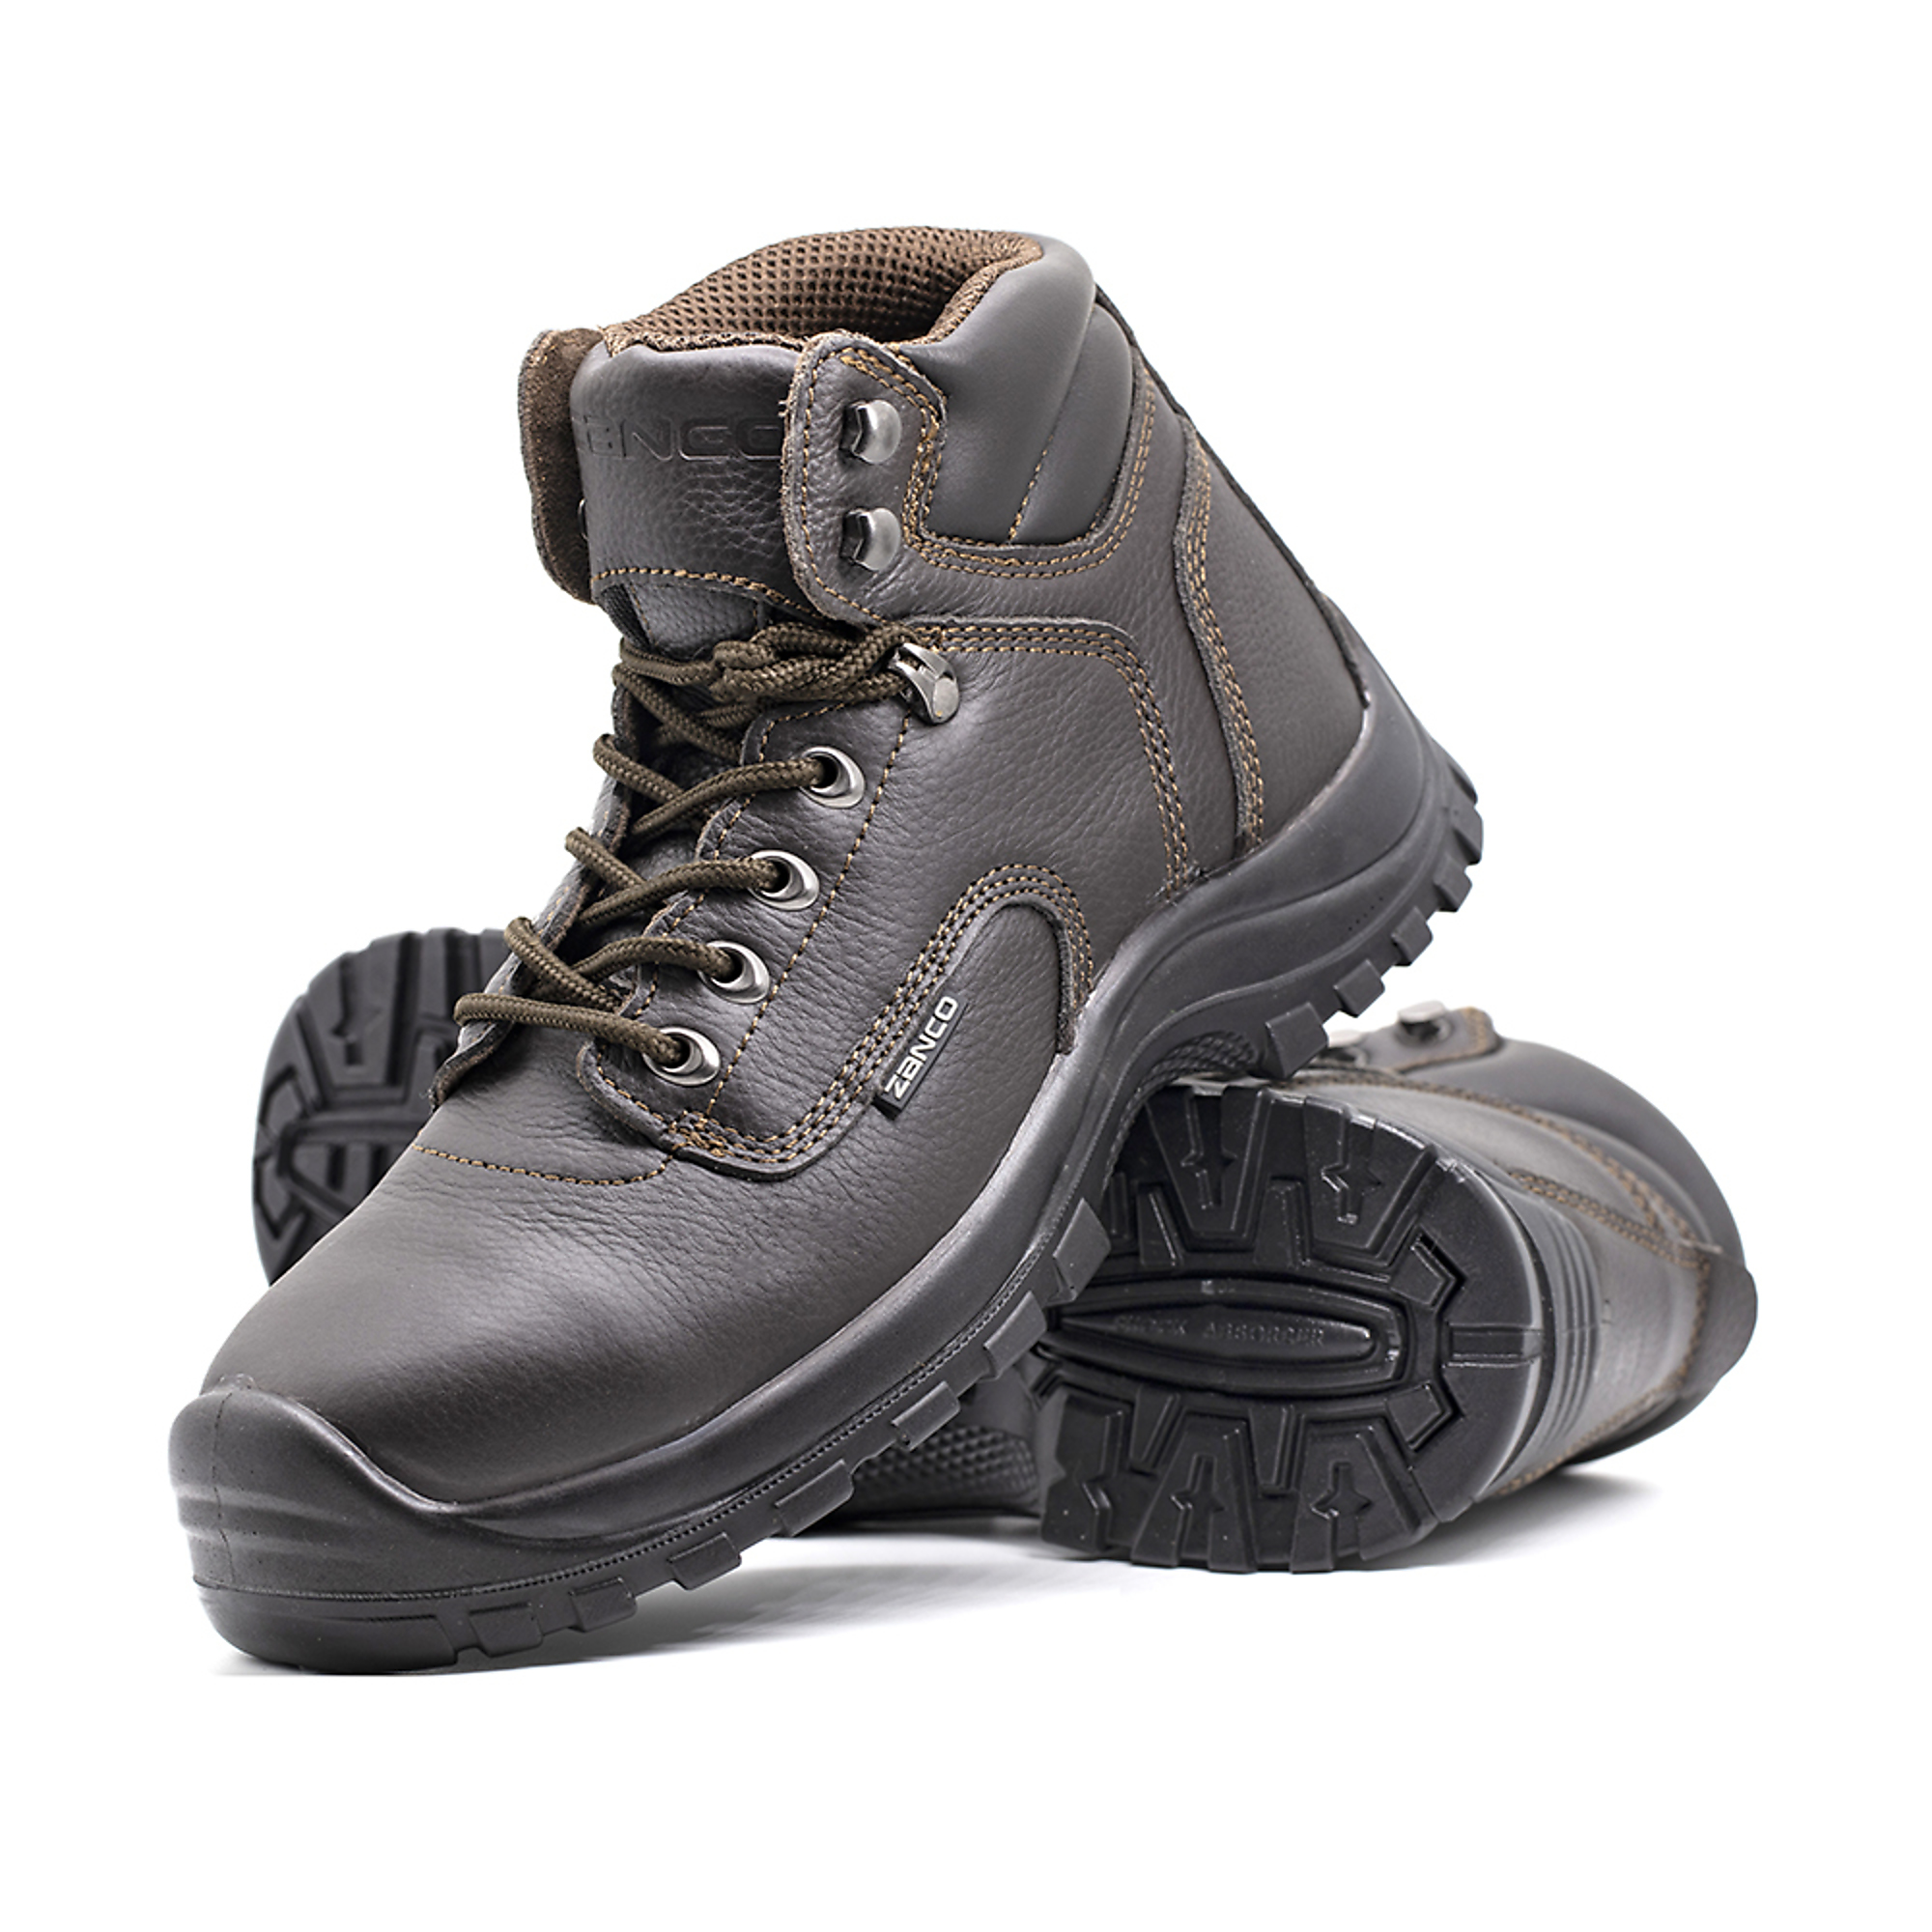 Zanco, Men's Waterproof,Steel toe,EH,Safety boots, Size 7, Width Medium, Color BROWN, Model 7668-SE-7